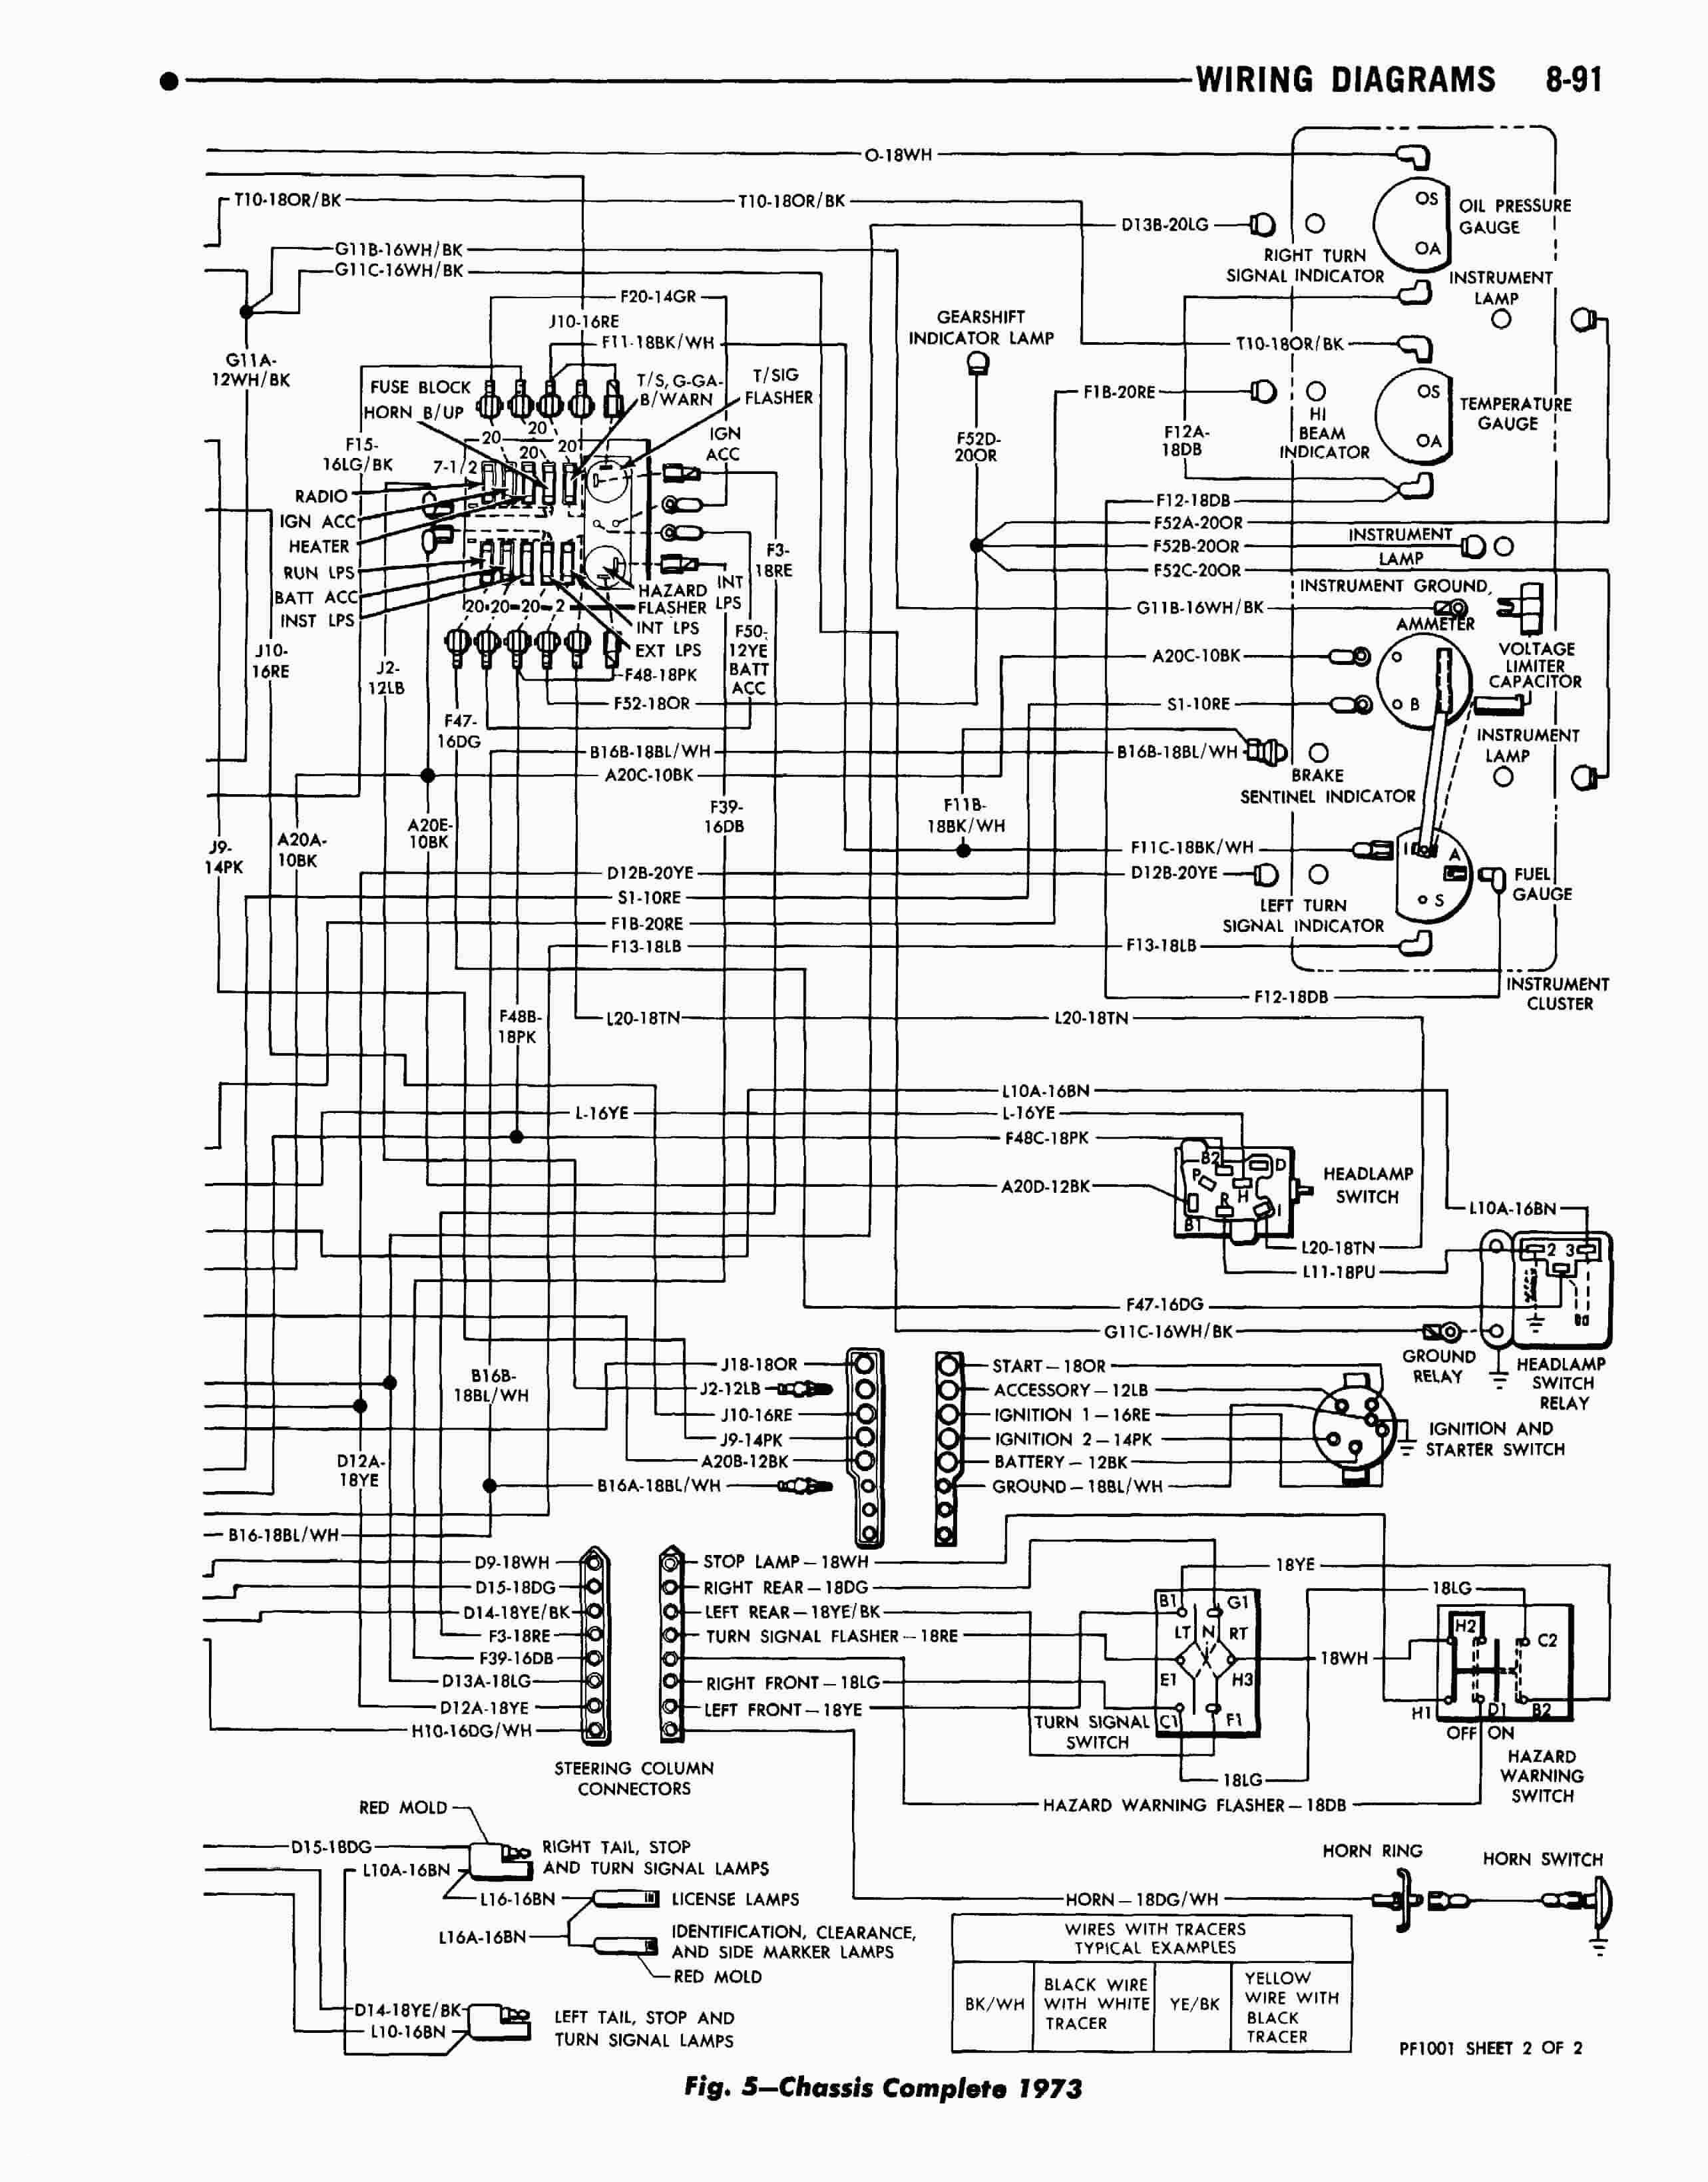 1976 dodge sportsman motorhome wiring diagram enthusiast wiring rh rasalibre co 1980 Dodge Van 1970 Dodge